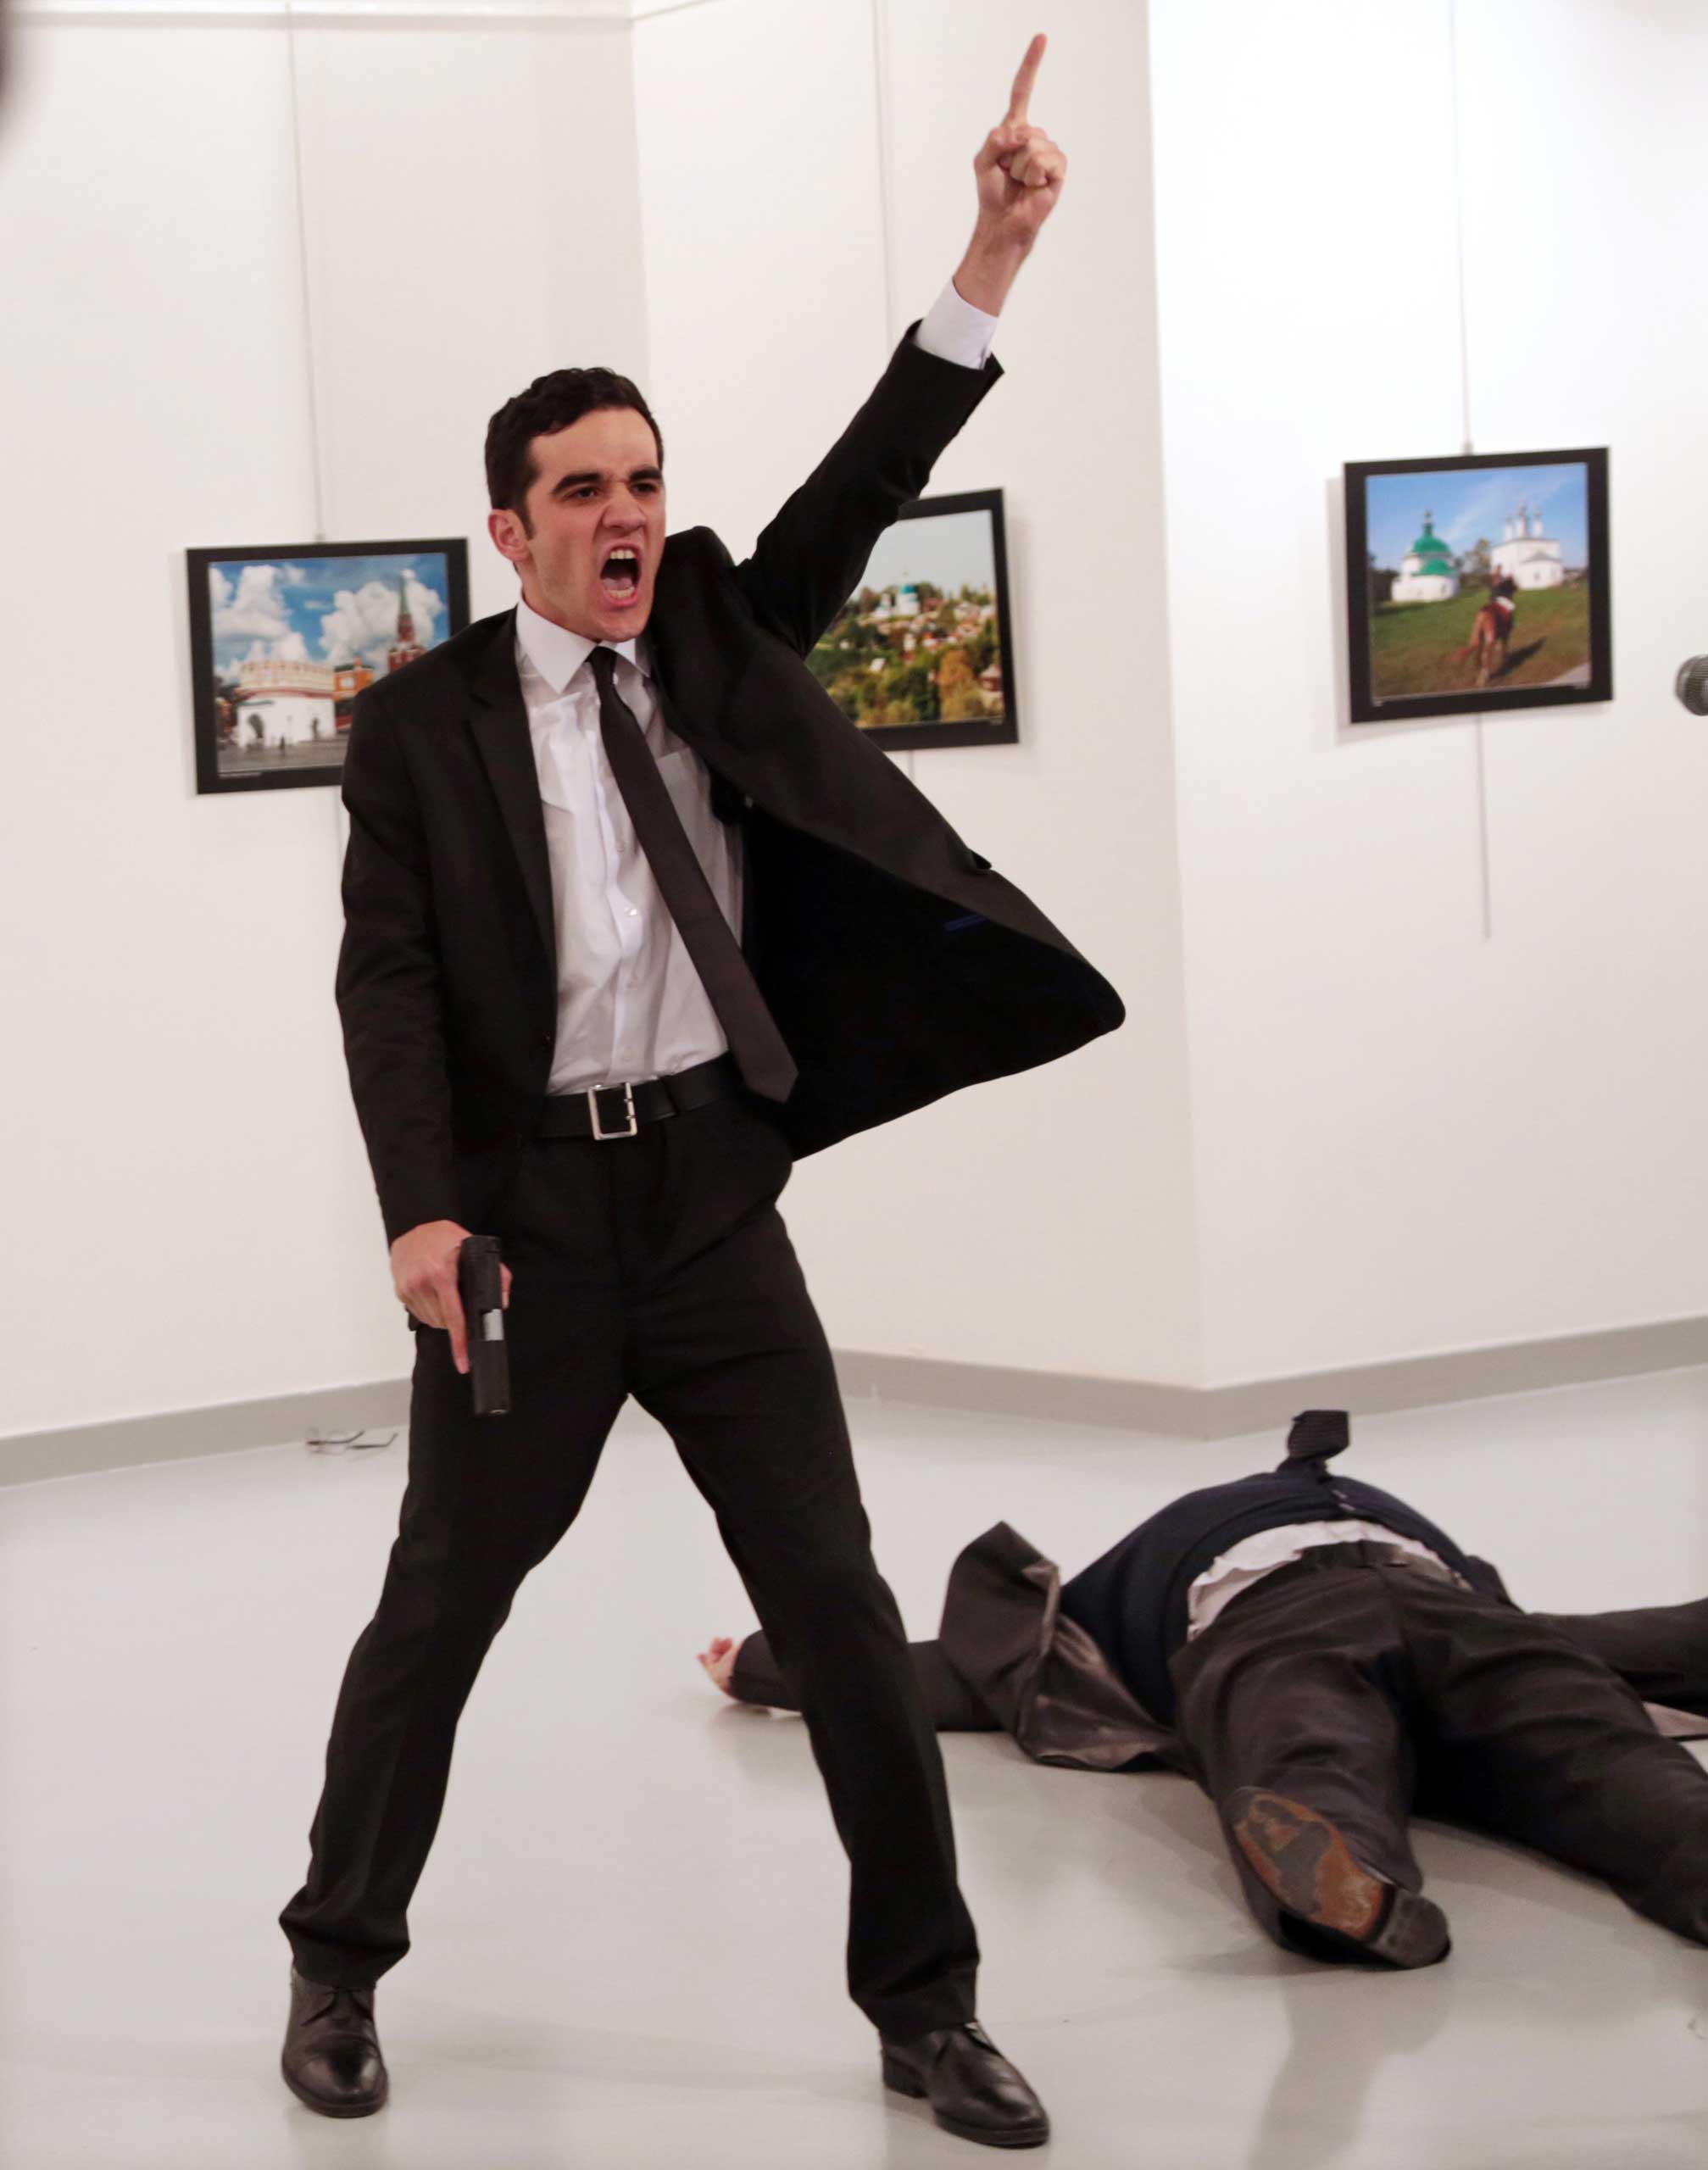 Mevlut Mert Altintas shouts after shooting Andrei Karlov, right, the Russian ambassador to Turkey, at an art gallery in Ankara, Turkey, Dec. 19, 2016.